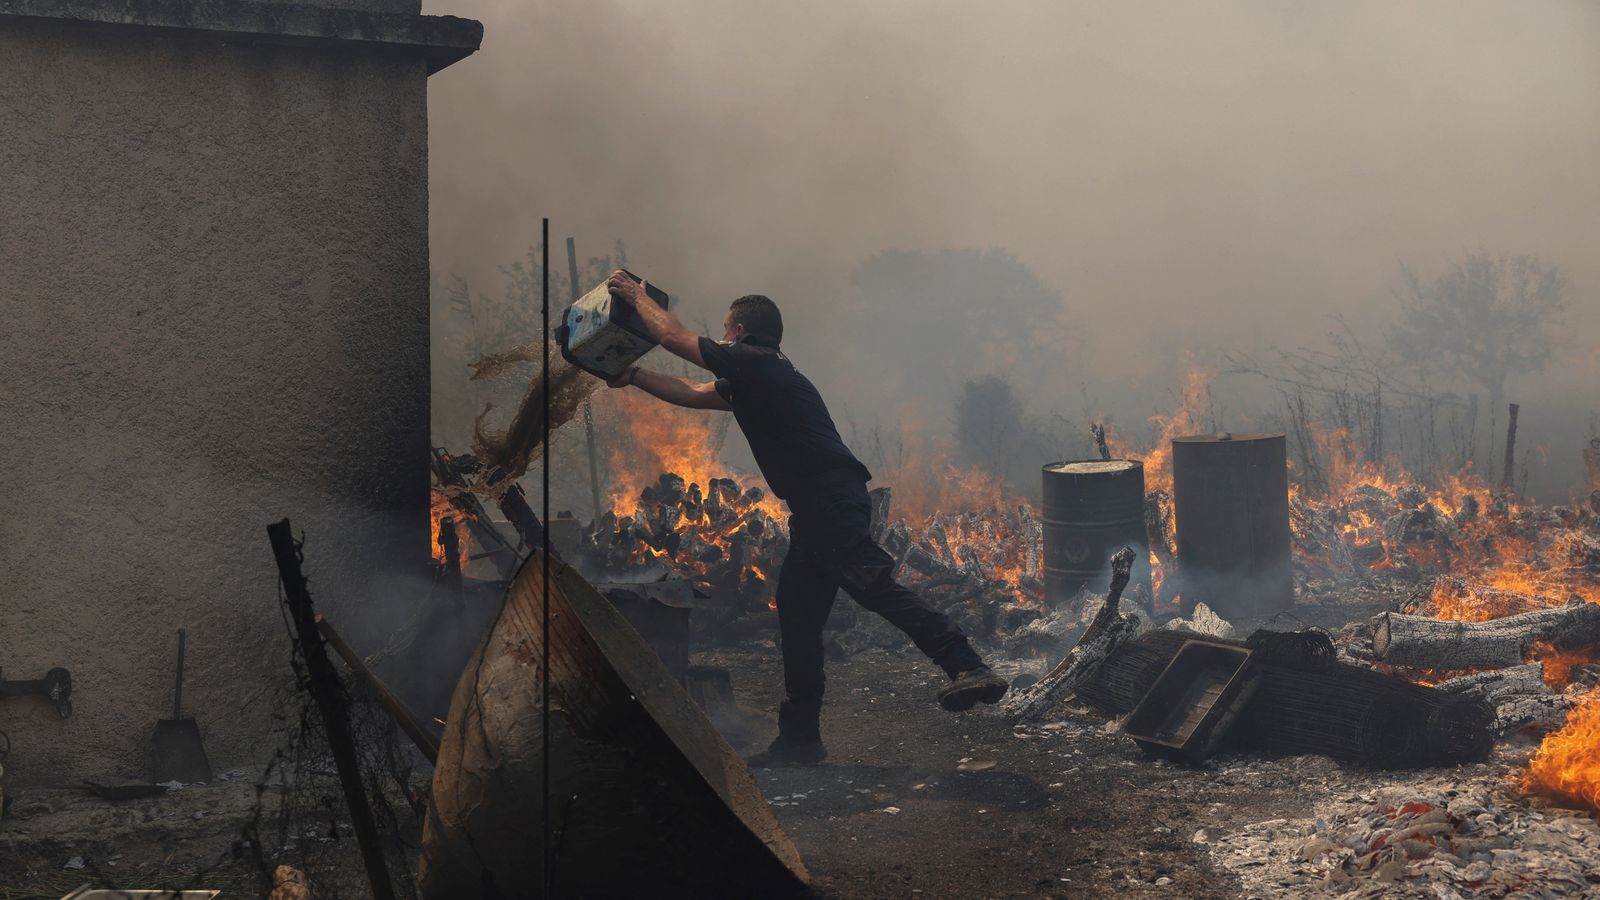 Kebakaran hutan di Lesvos berkobar saat turis dan penduduk diperintahkan untuk meninggalkan kota di pulau Yunani |  berita Dunia